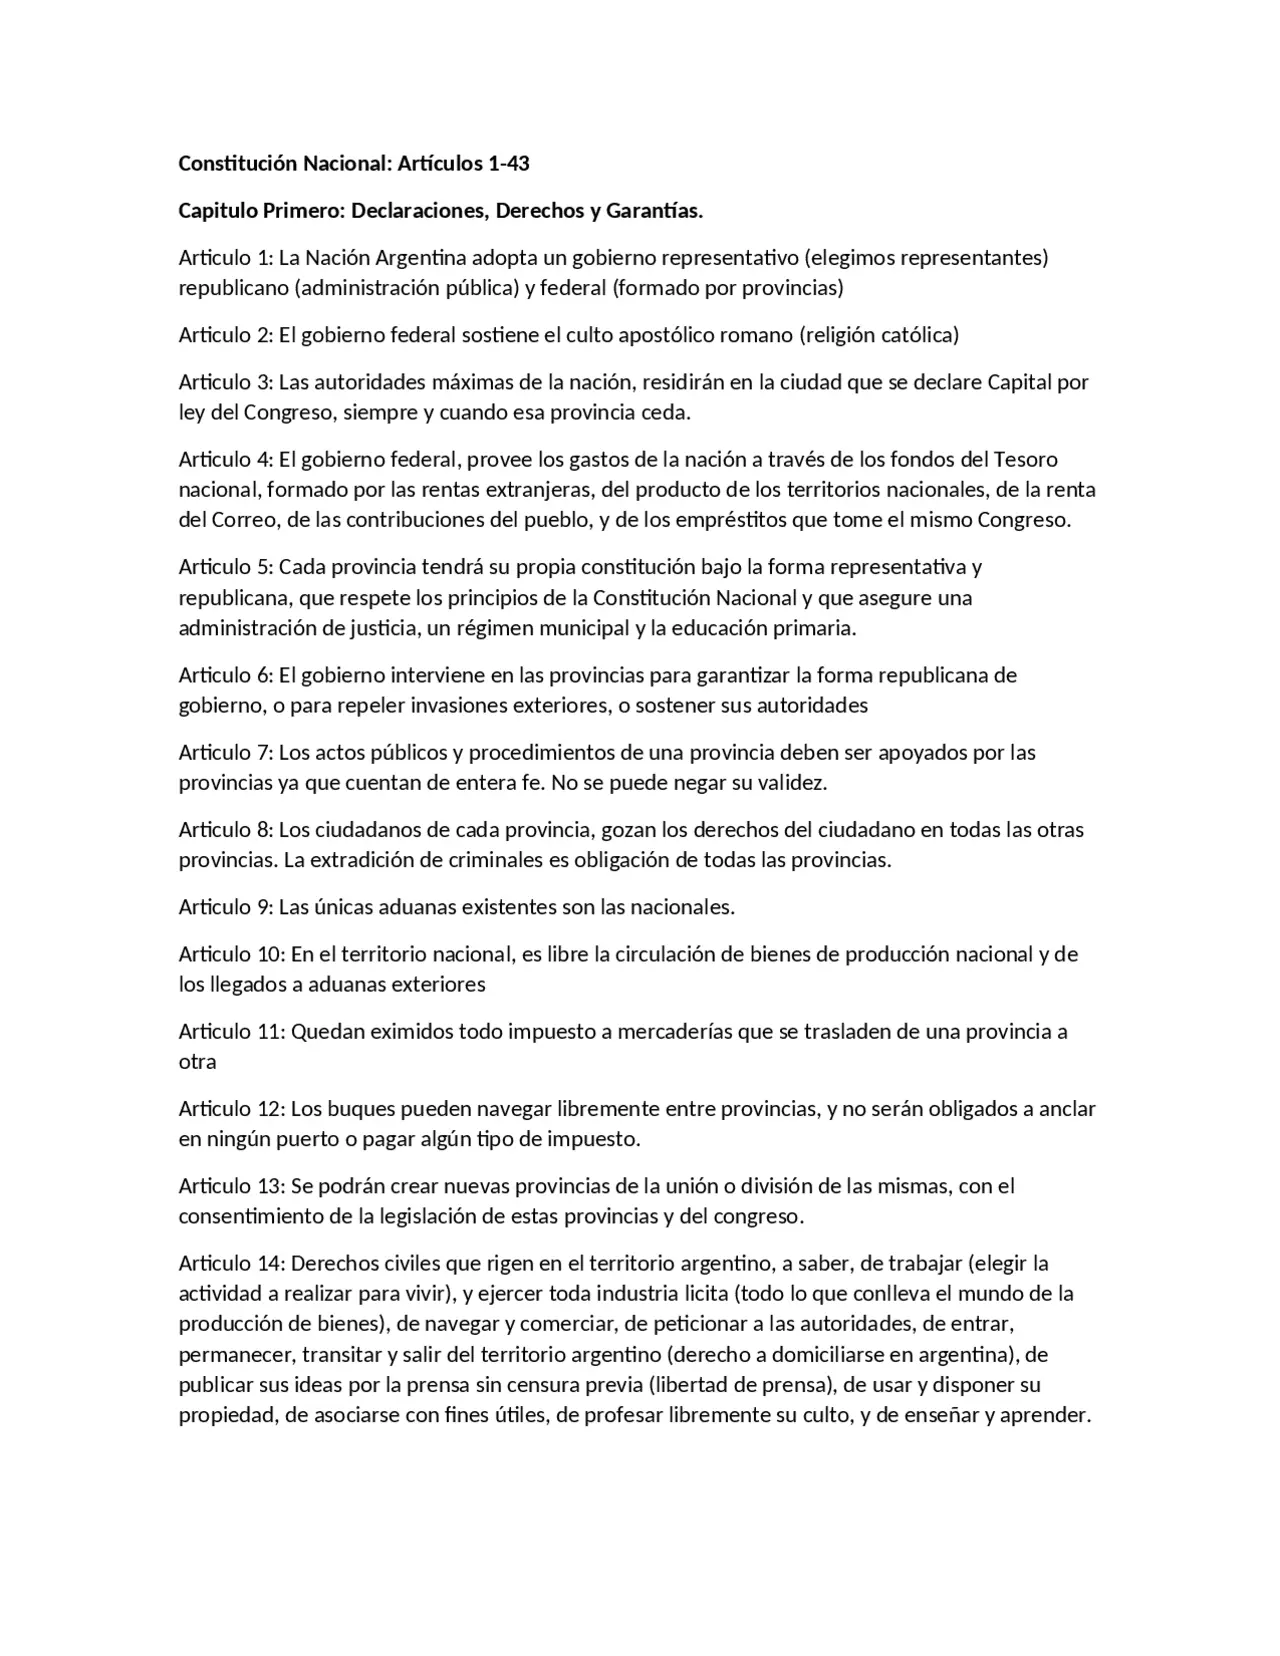 resumen de la constitucion nacional argentina - Cuál es el contenido de la Constitución Nacional